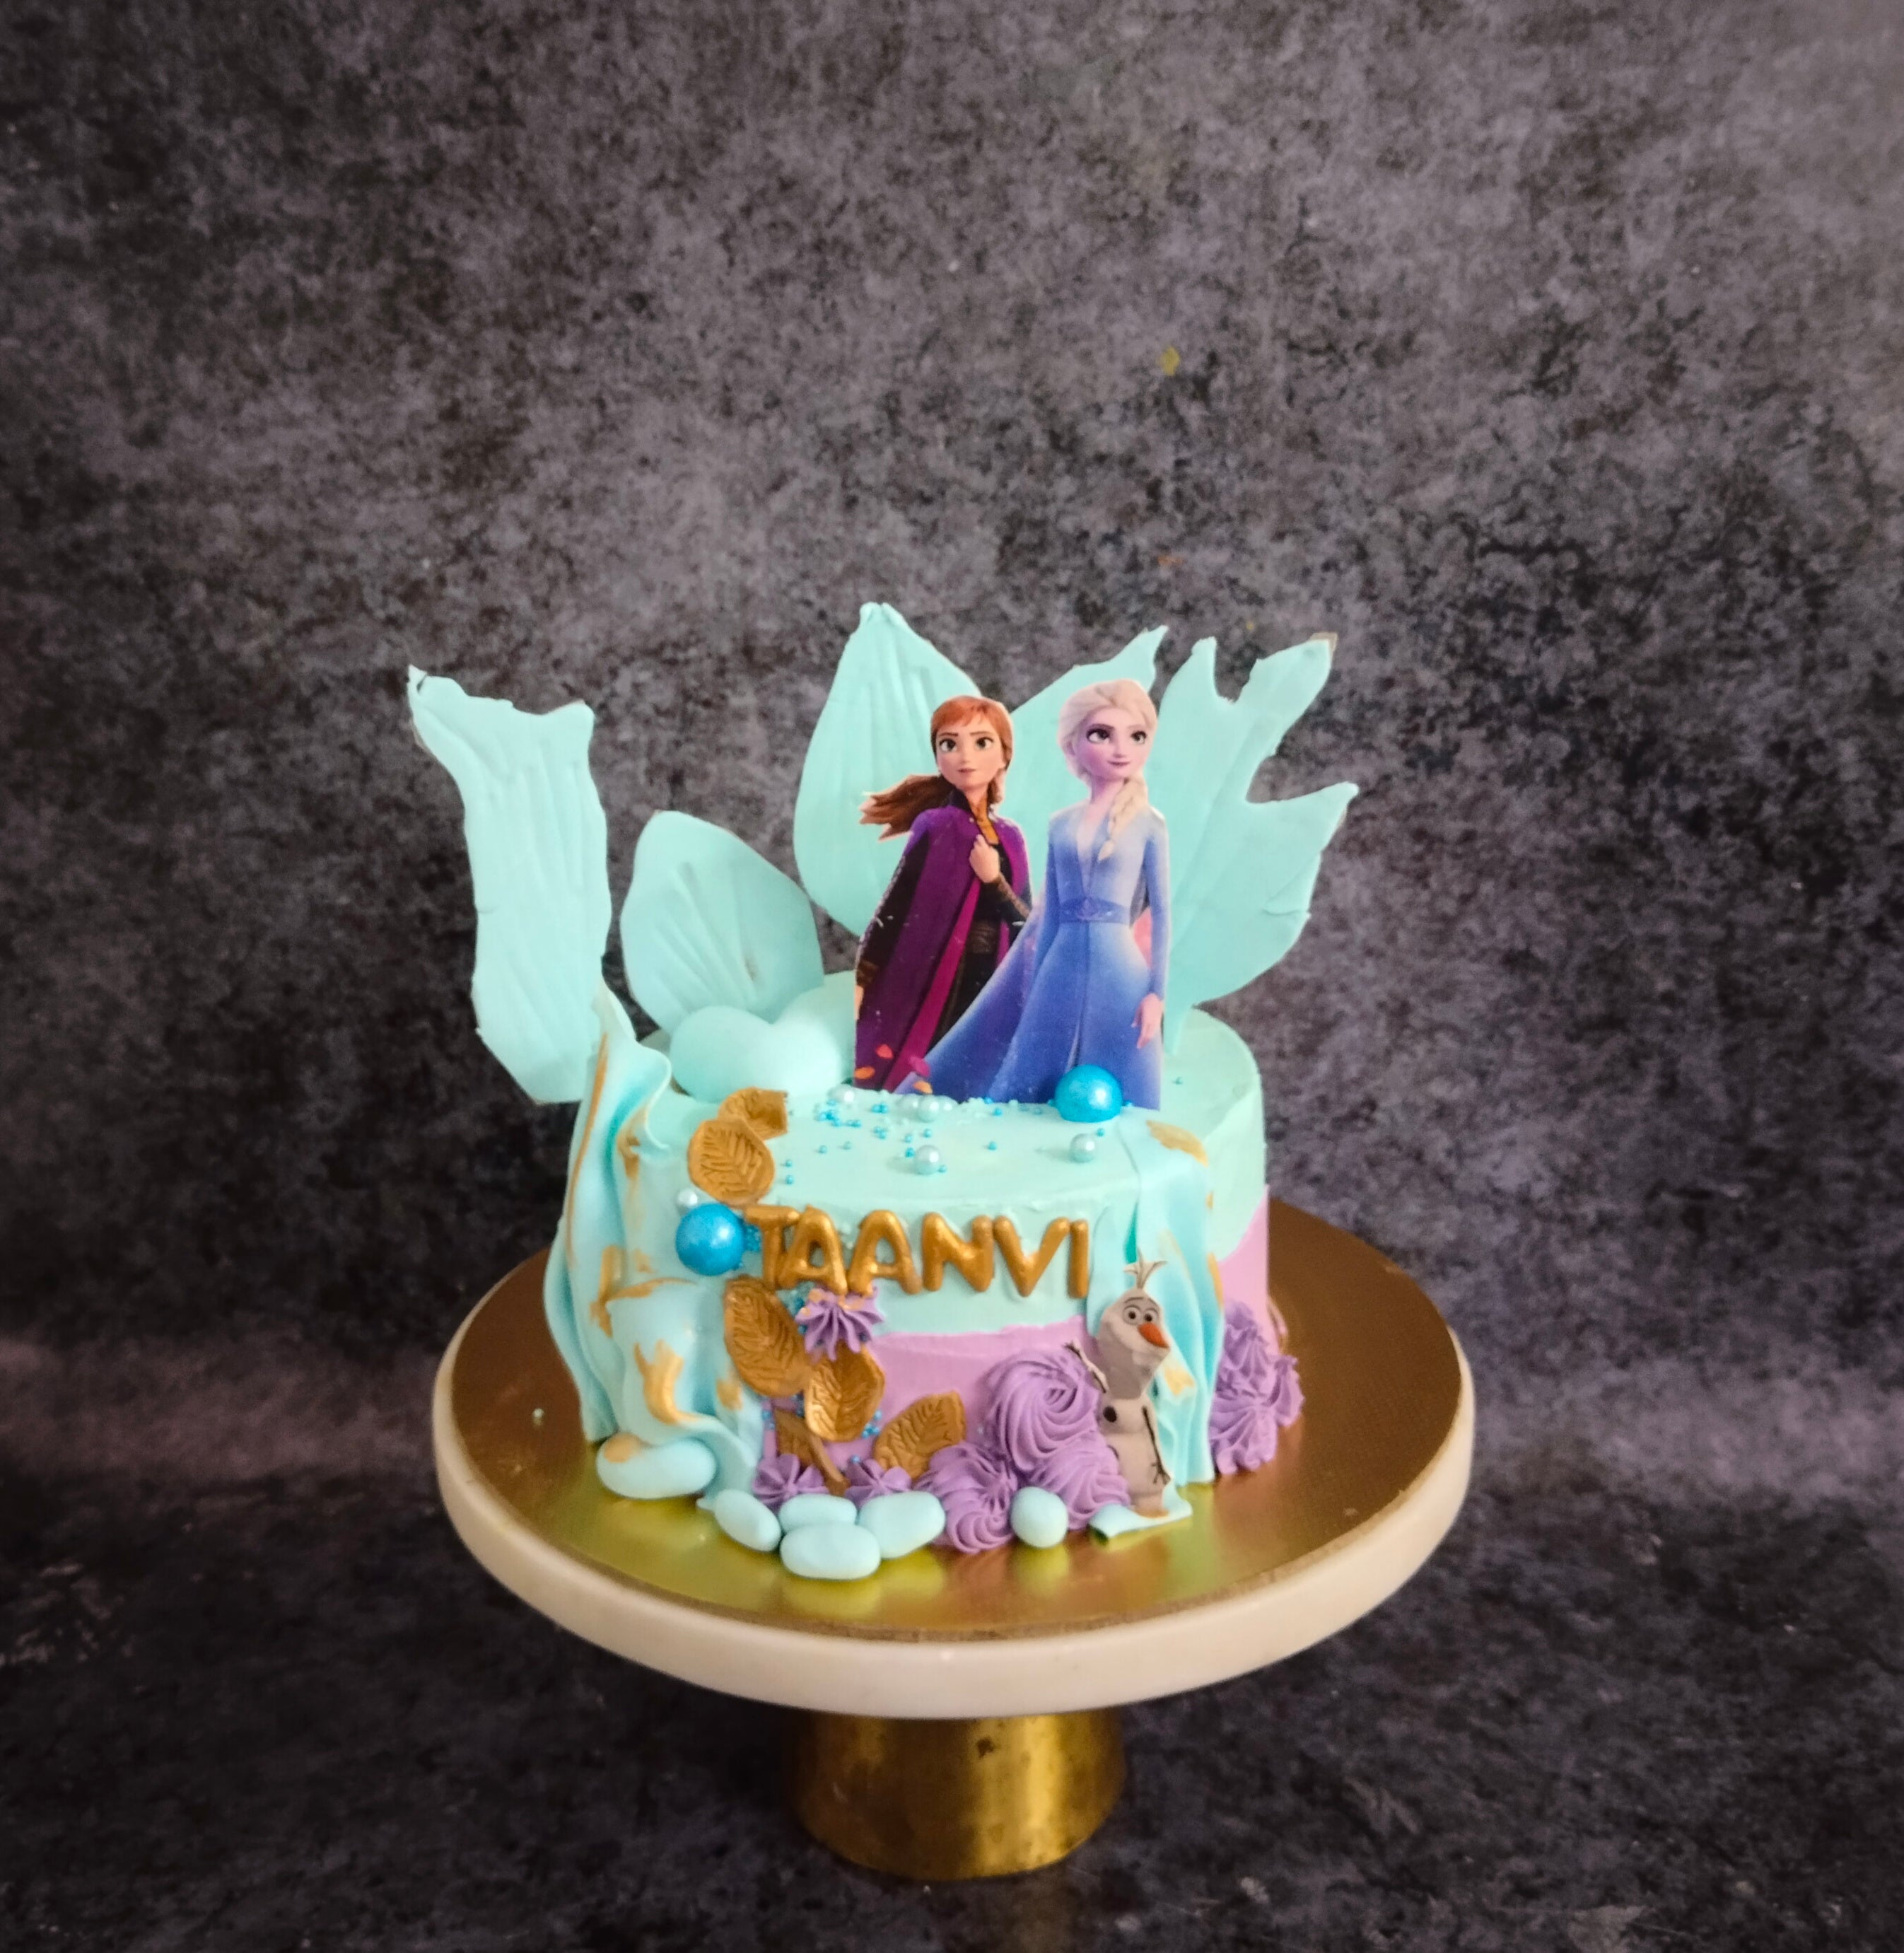 Pictures Of Frozen Birthday Cake Ideas by jamesrunel71 on DeviantArt